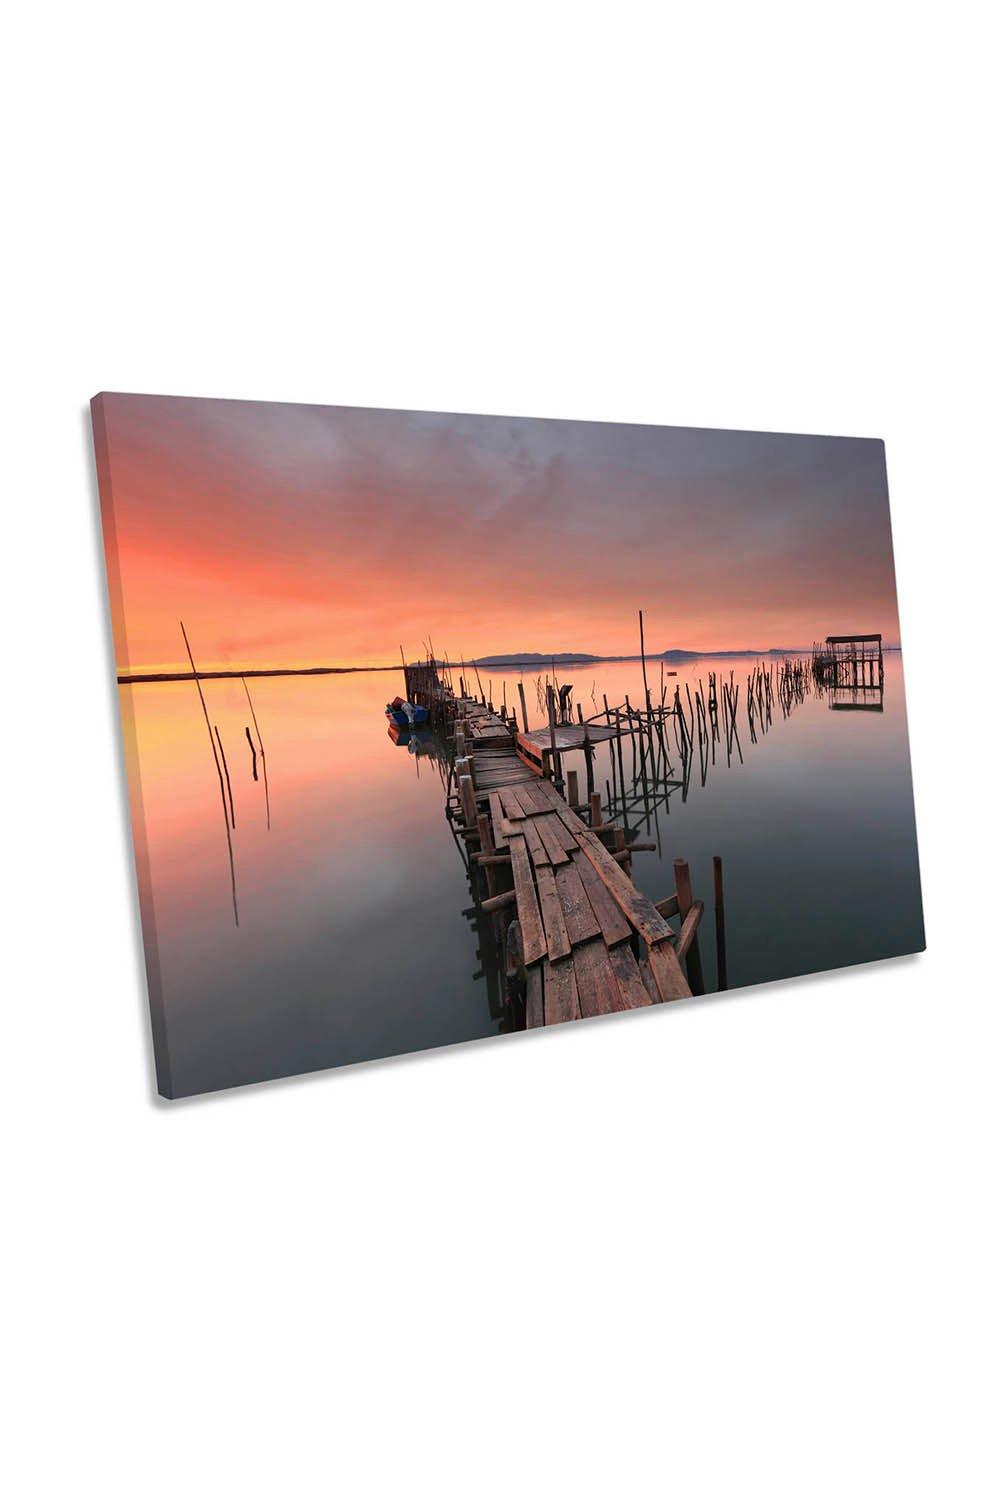 Sunset Jetty Pier Docks Seascape Canvas Wall Art Picture Print